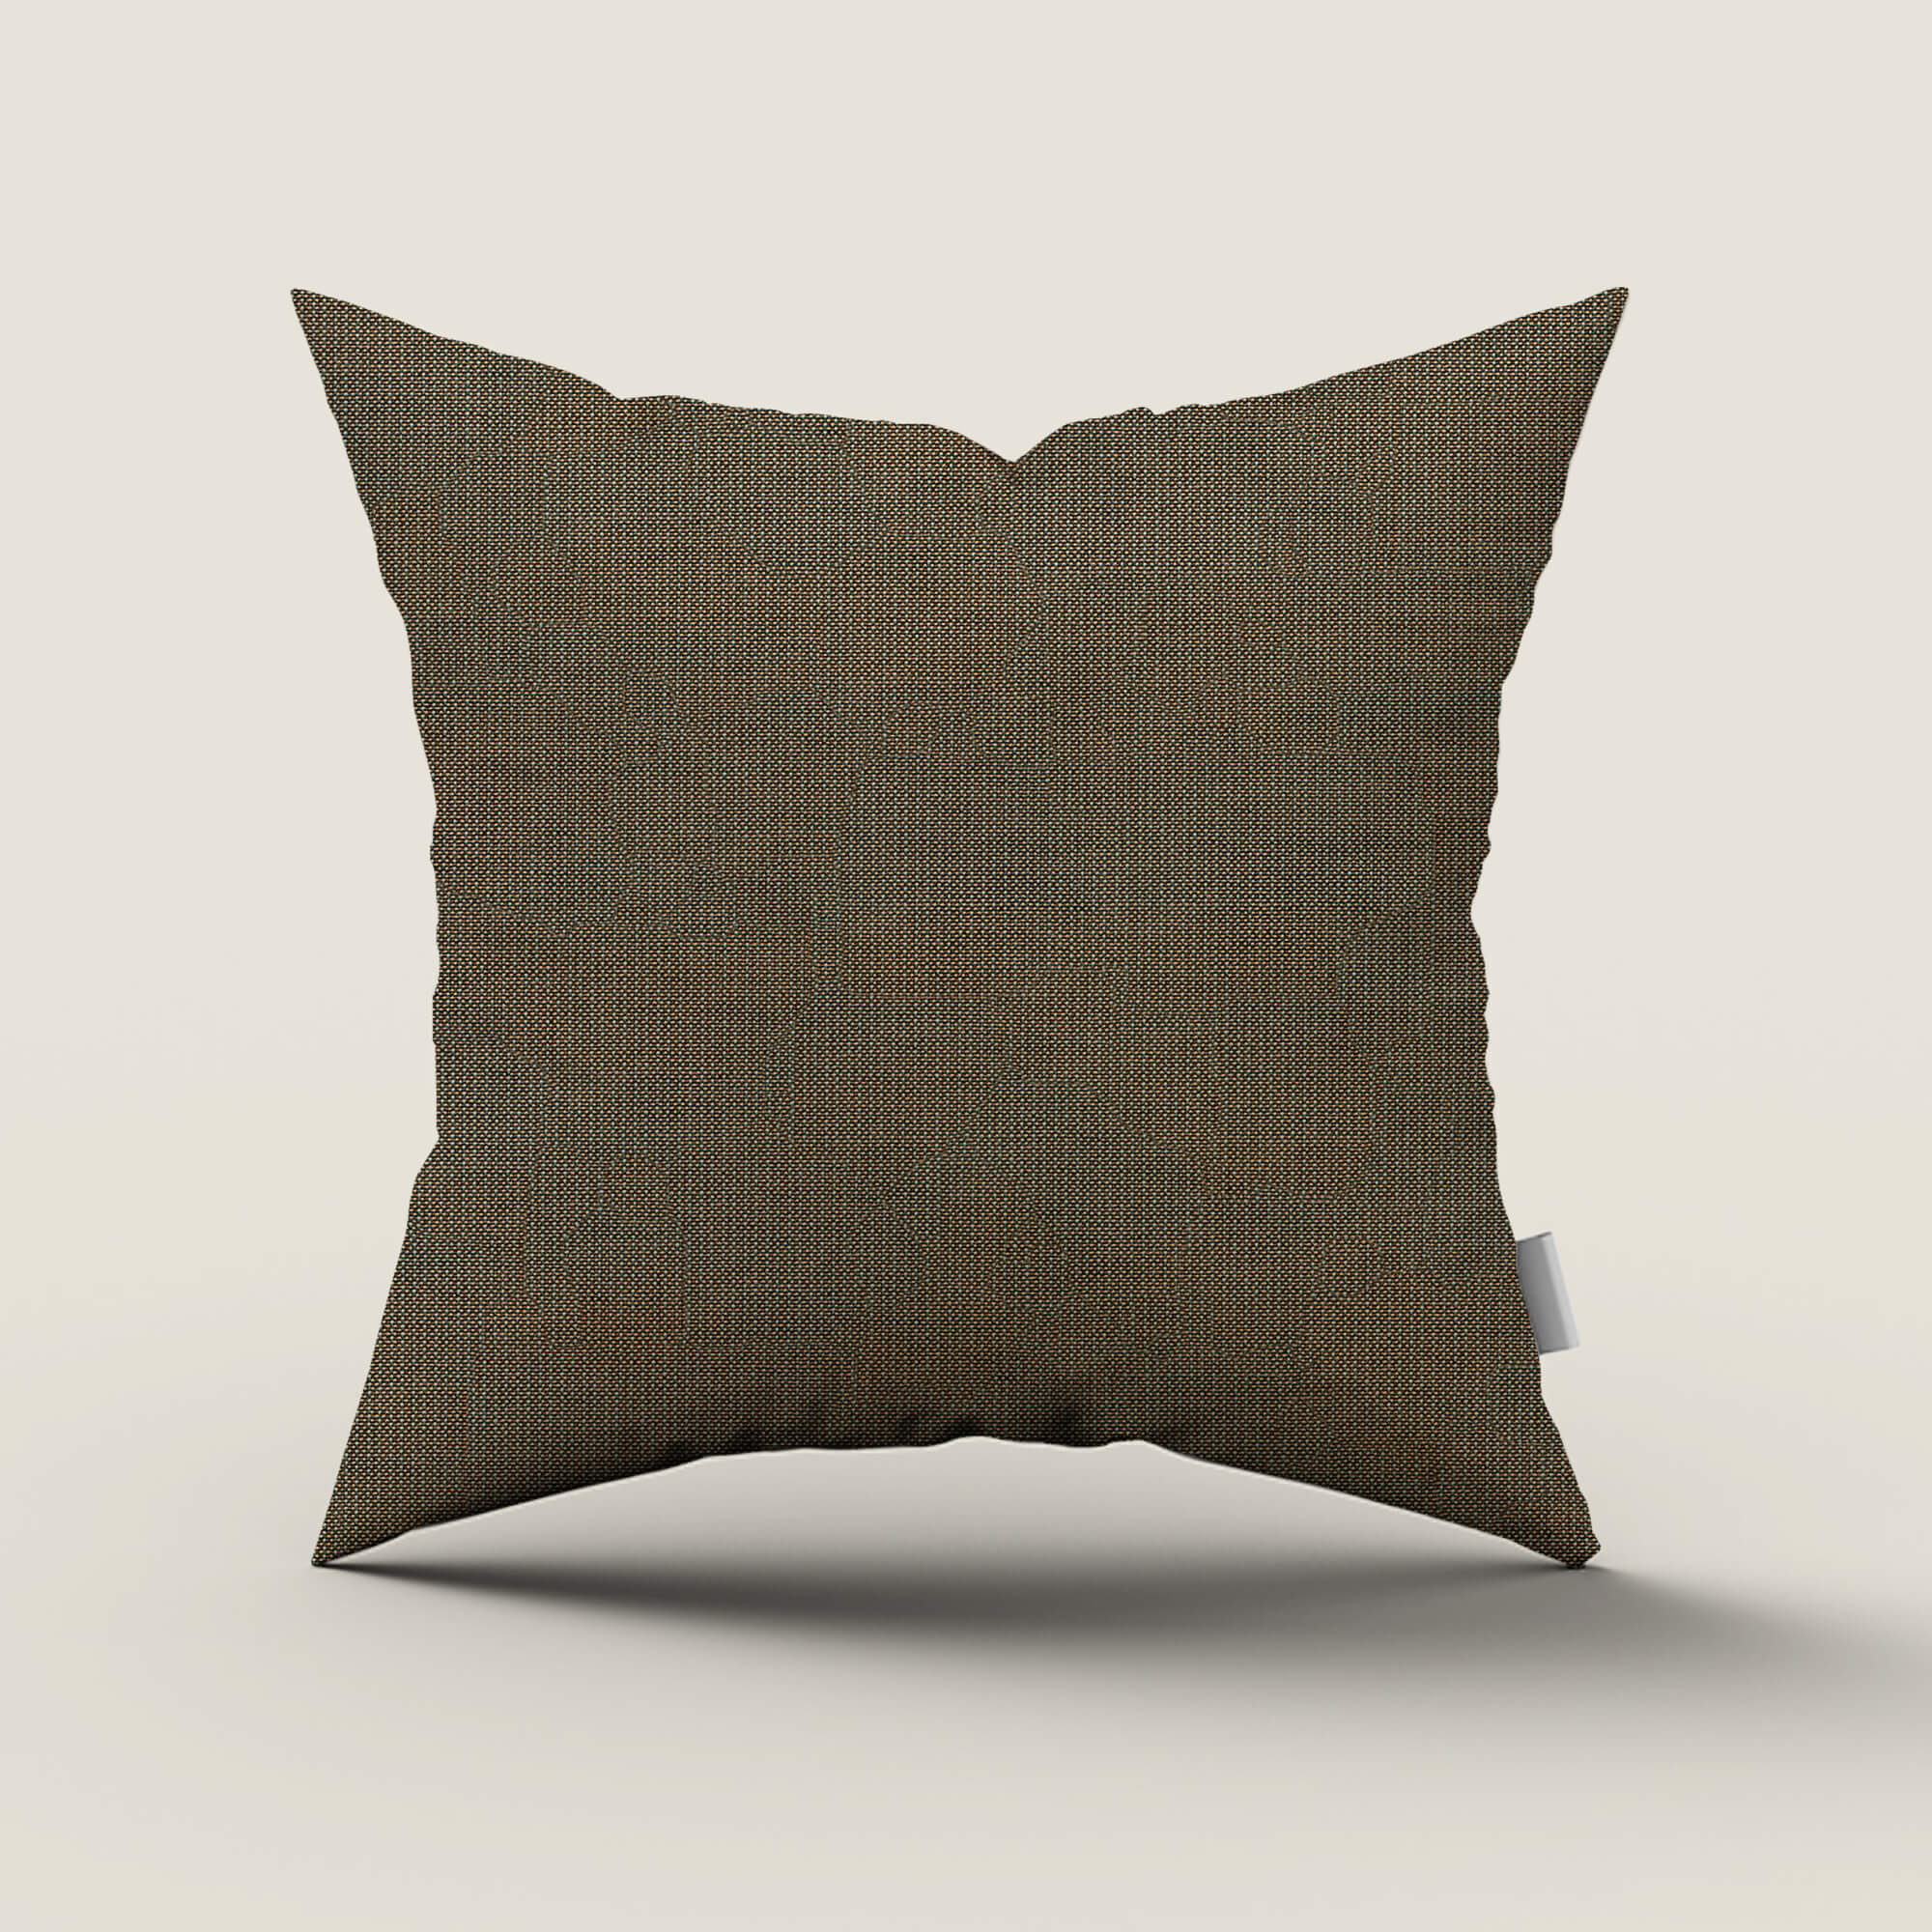 PENGI Waterproof Outdoor Pillow Case 1 Pcs - Blend Sepia Tint